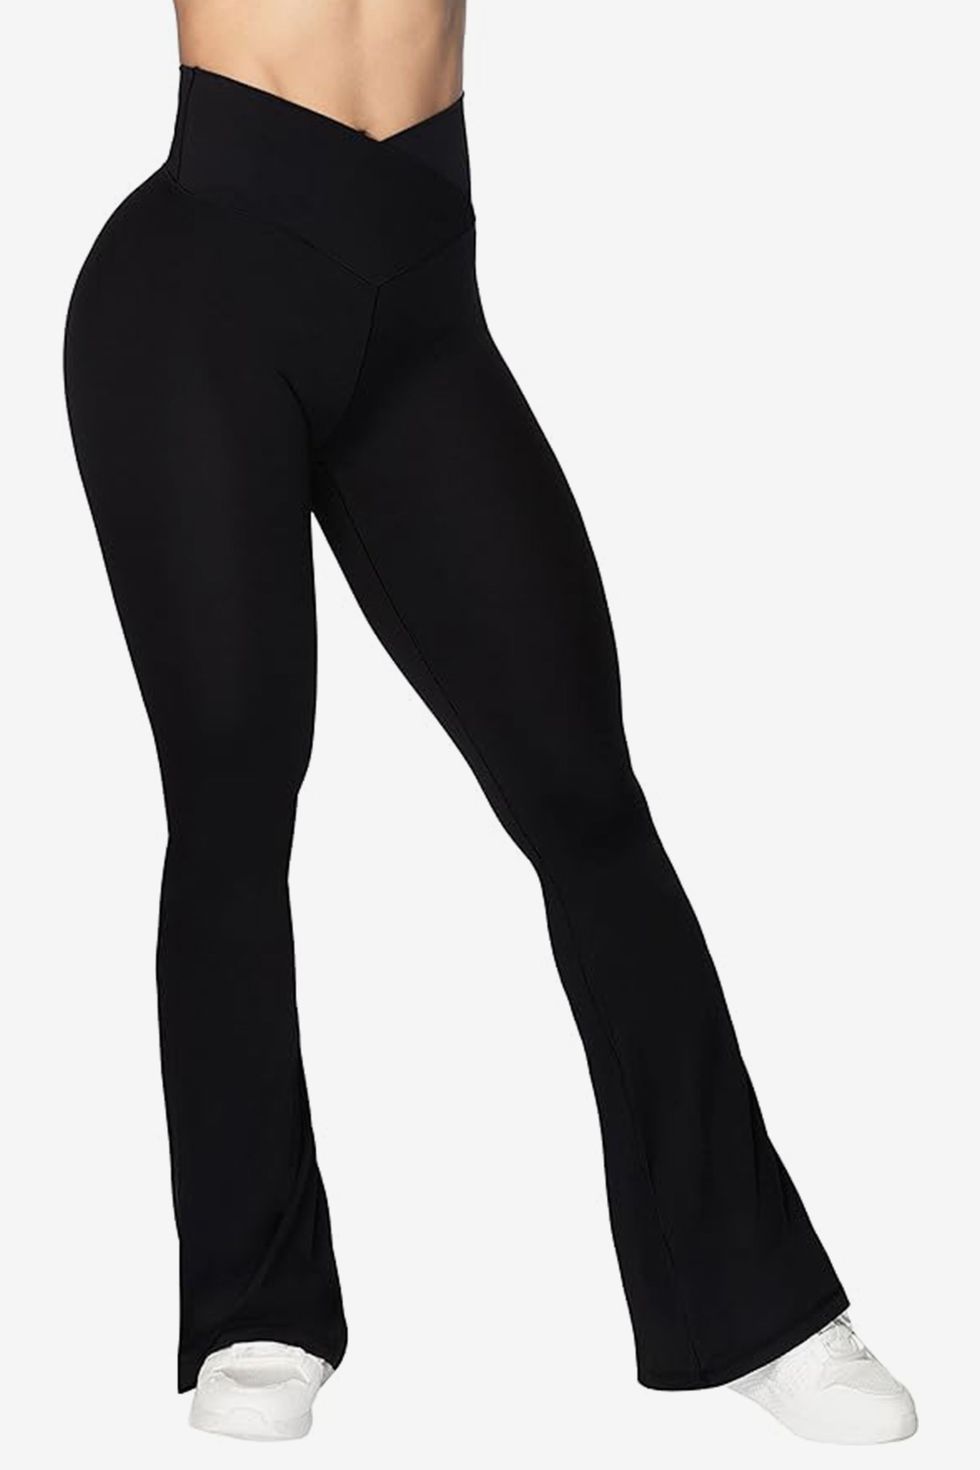 Sunzel Women's Leggings Black Size Small Capri Side Pockets